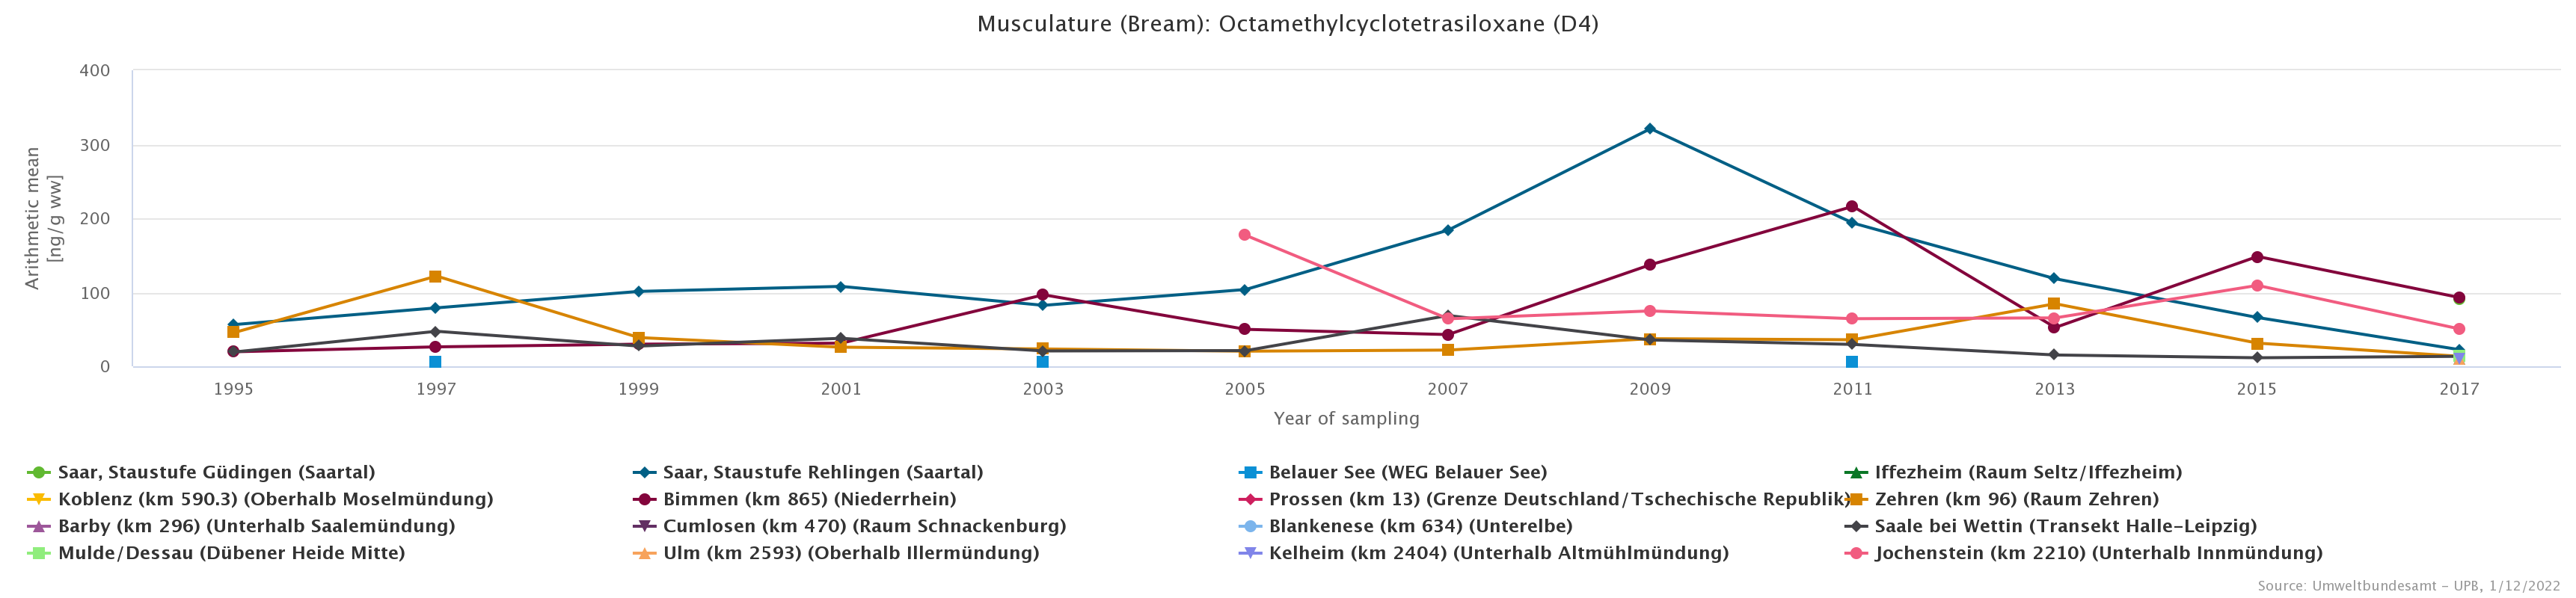 Especially noticeable high concentration of octamethylcyclotetrasiloxane in 2009 at the Saar sampling site Staustufe Rehlingen.